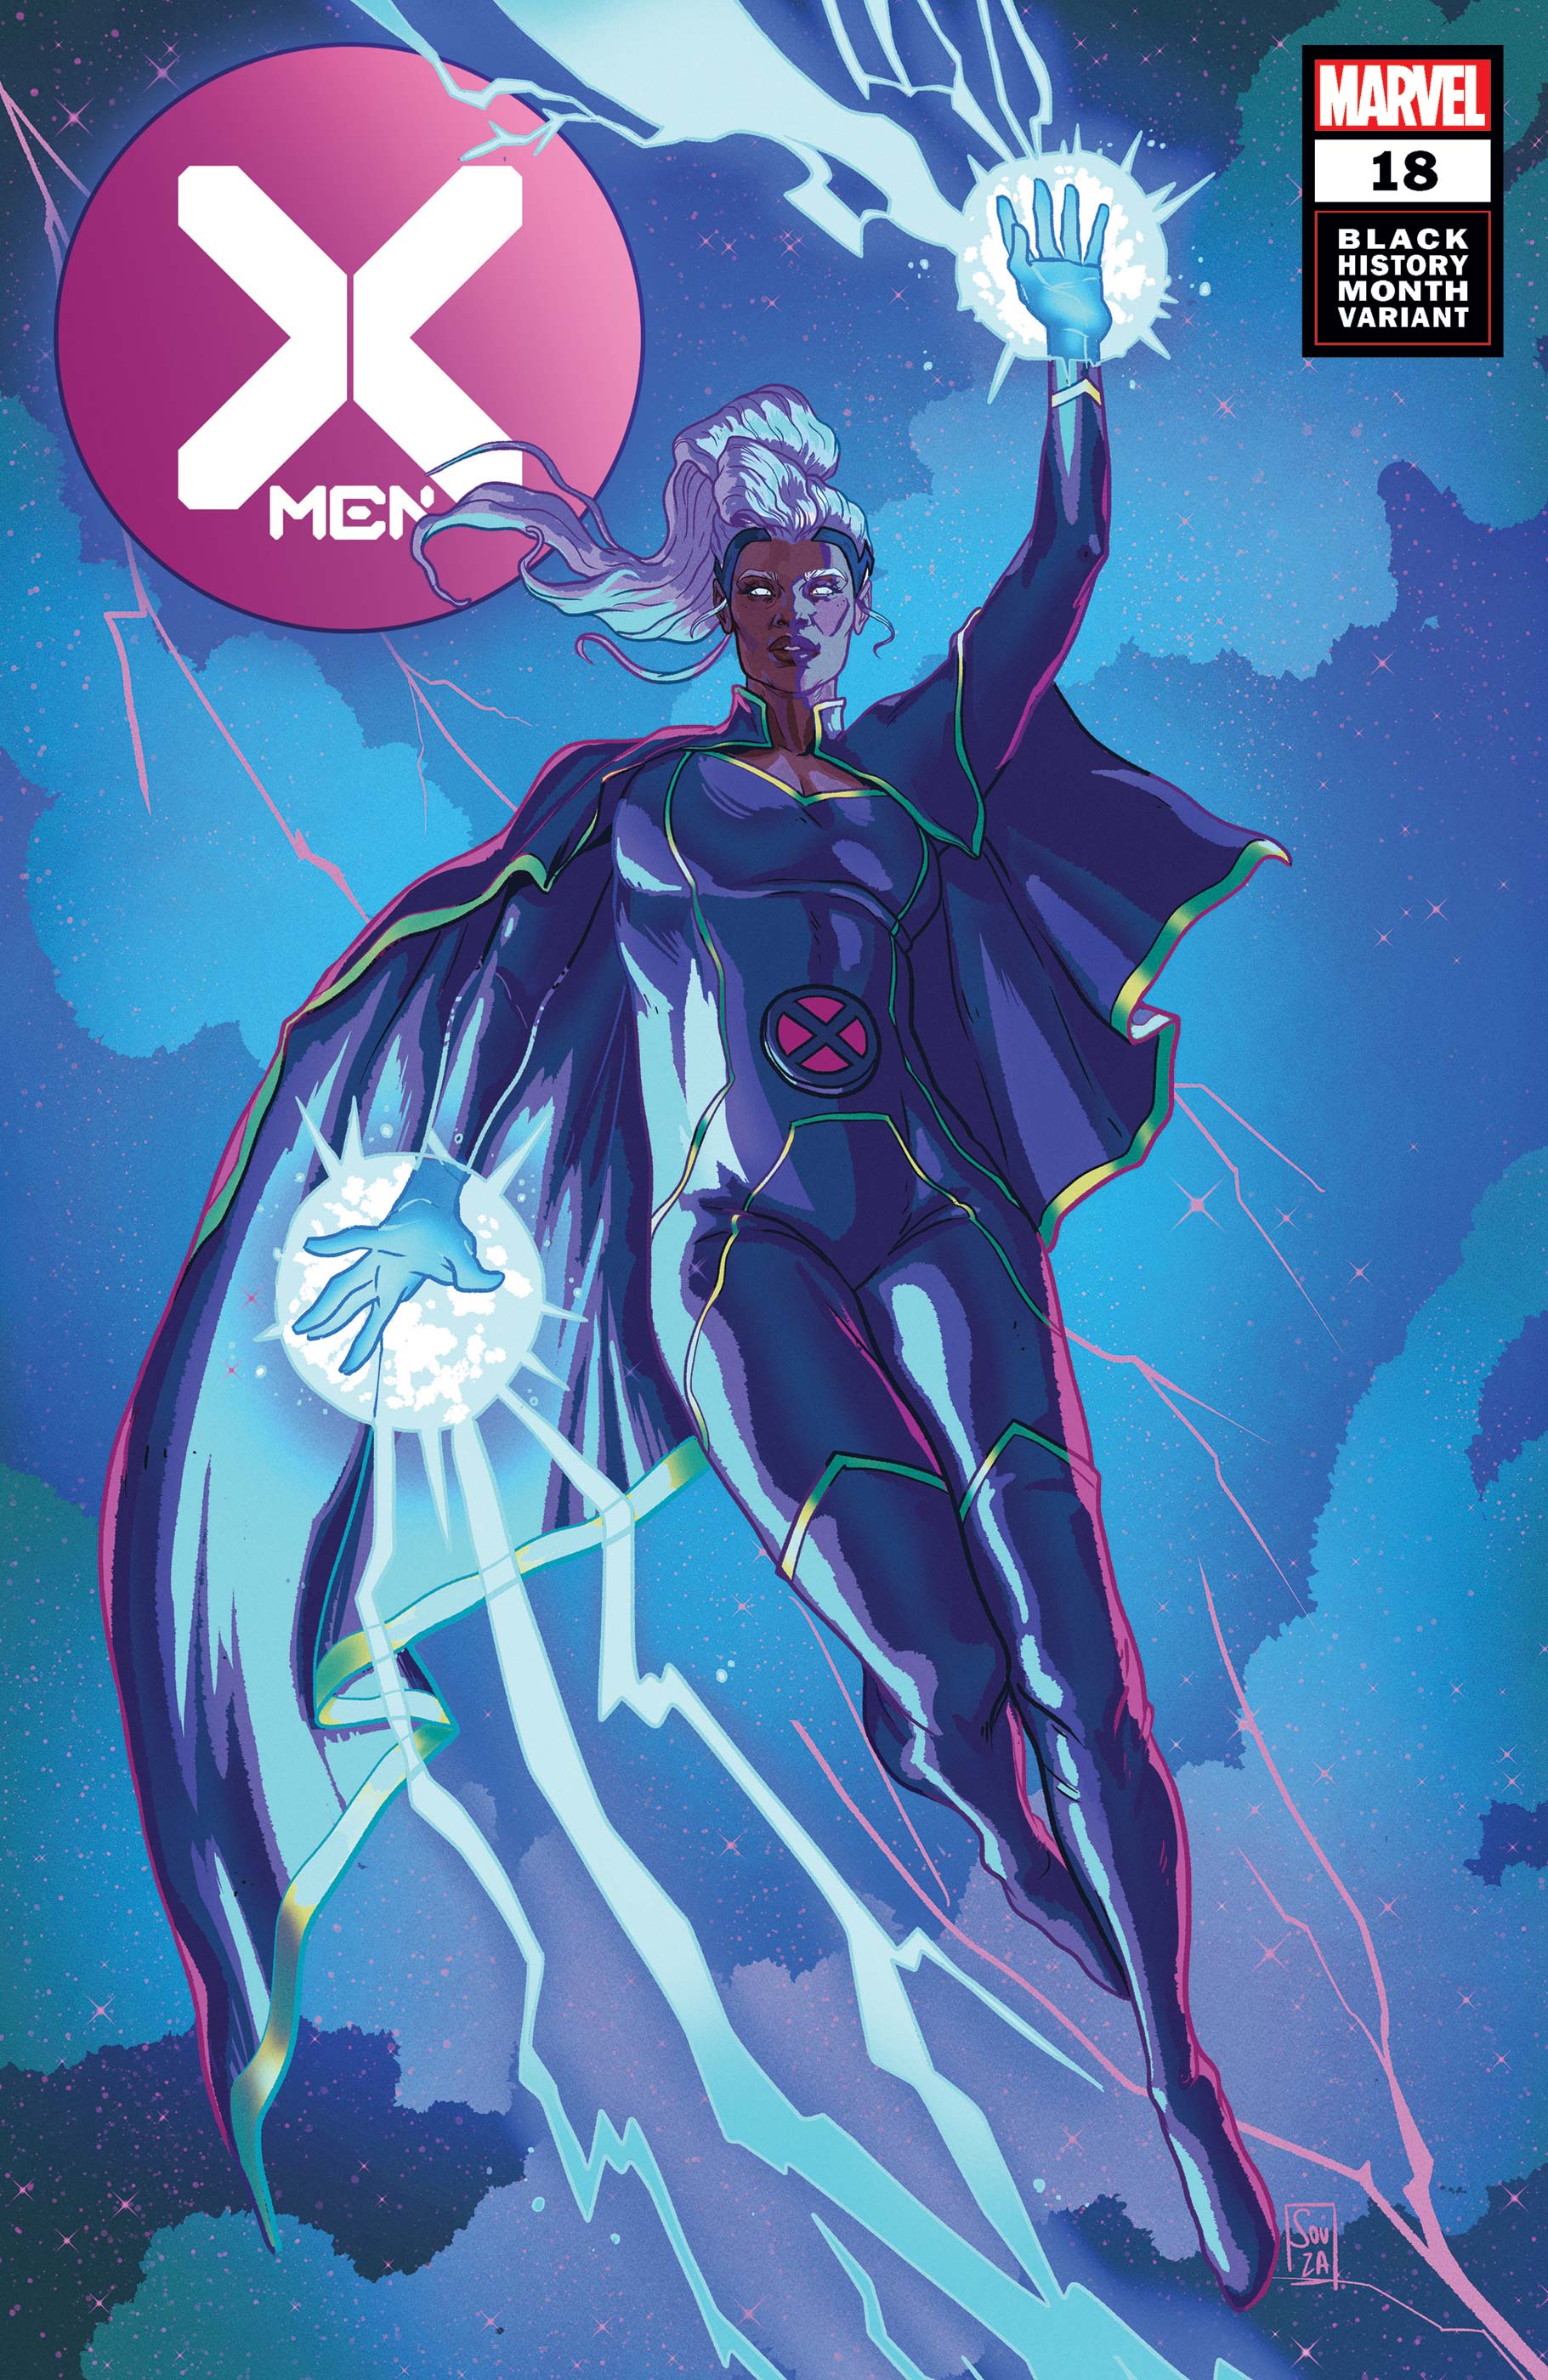 X-Men (2019) #18 (Variant)